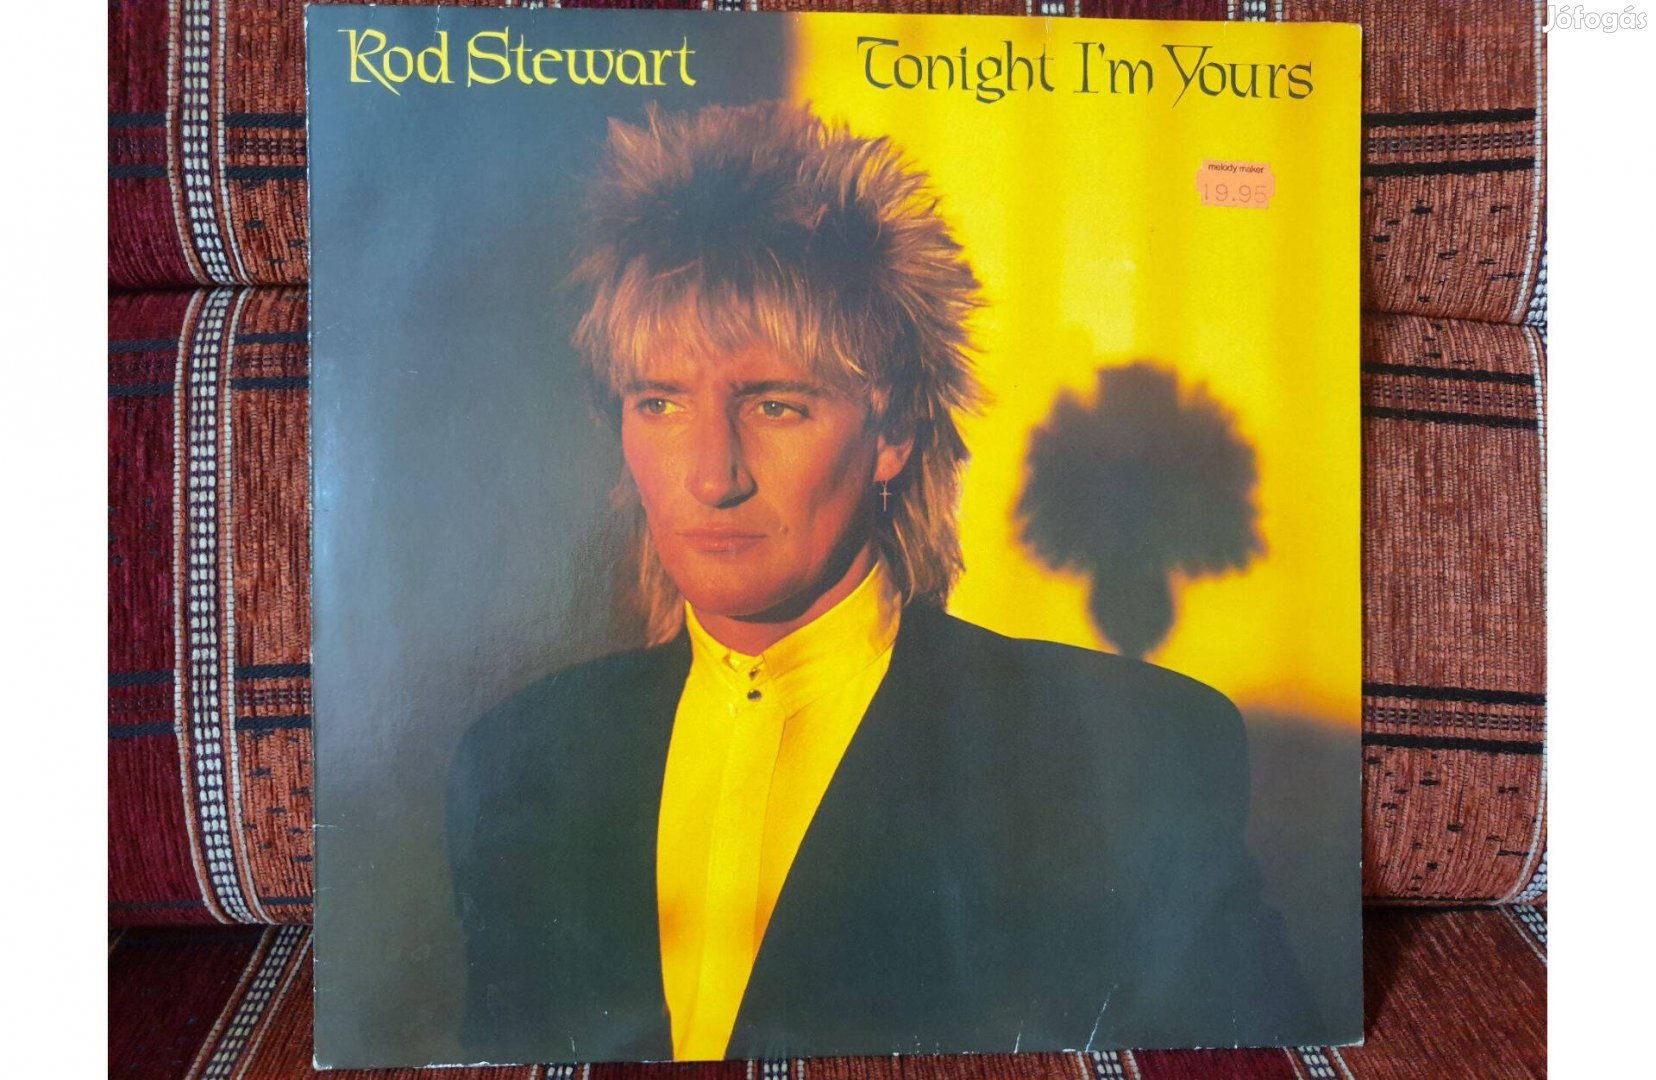 Rod Stewart - Tonight I'm Yours hanglemez bakelit lemez Vinyl